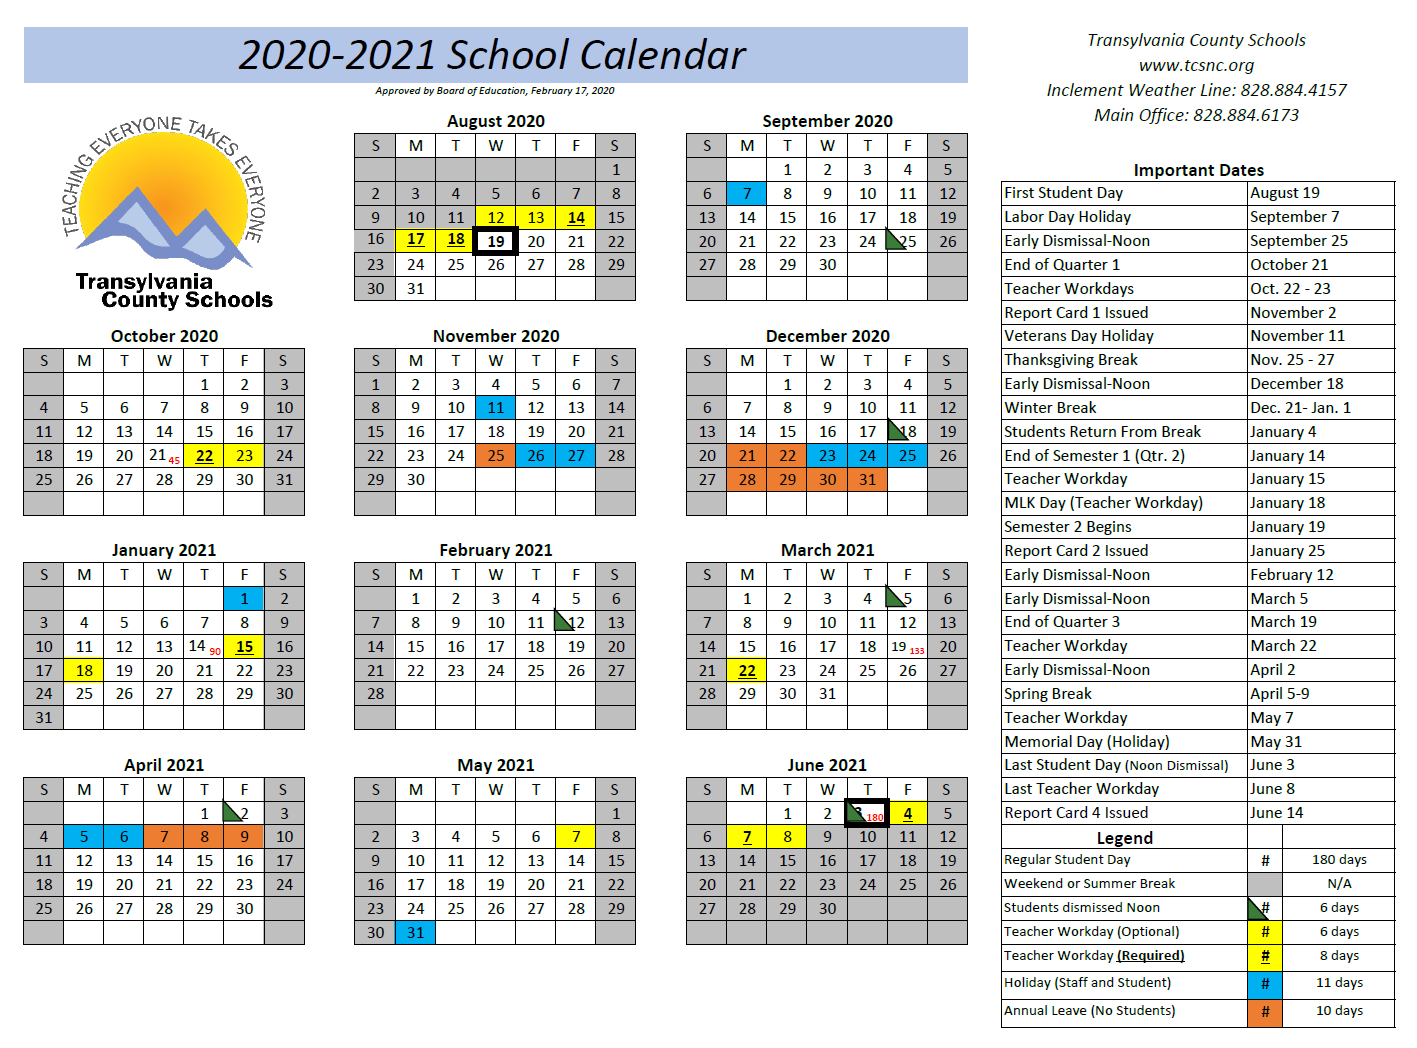 Brevard County School Calendar 2022 22 2022 Schoolcalendars